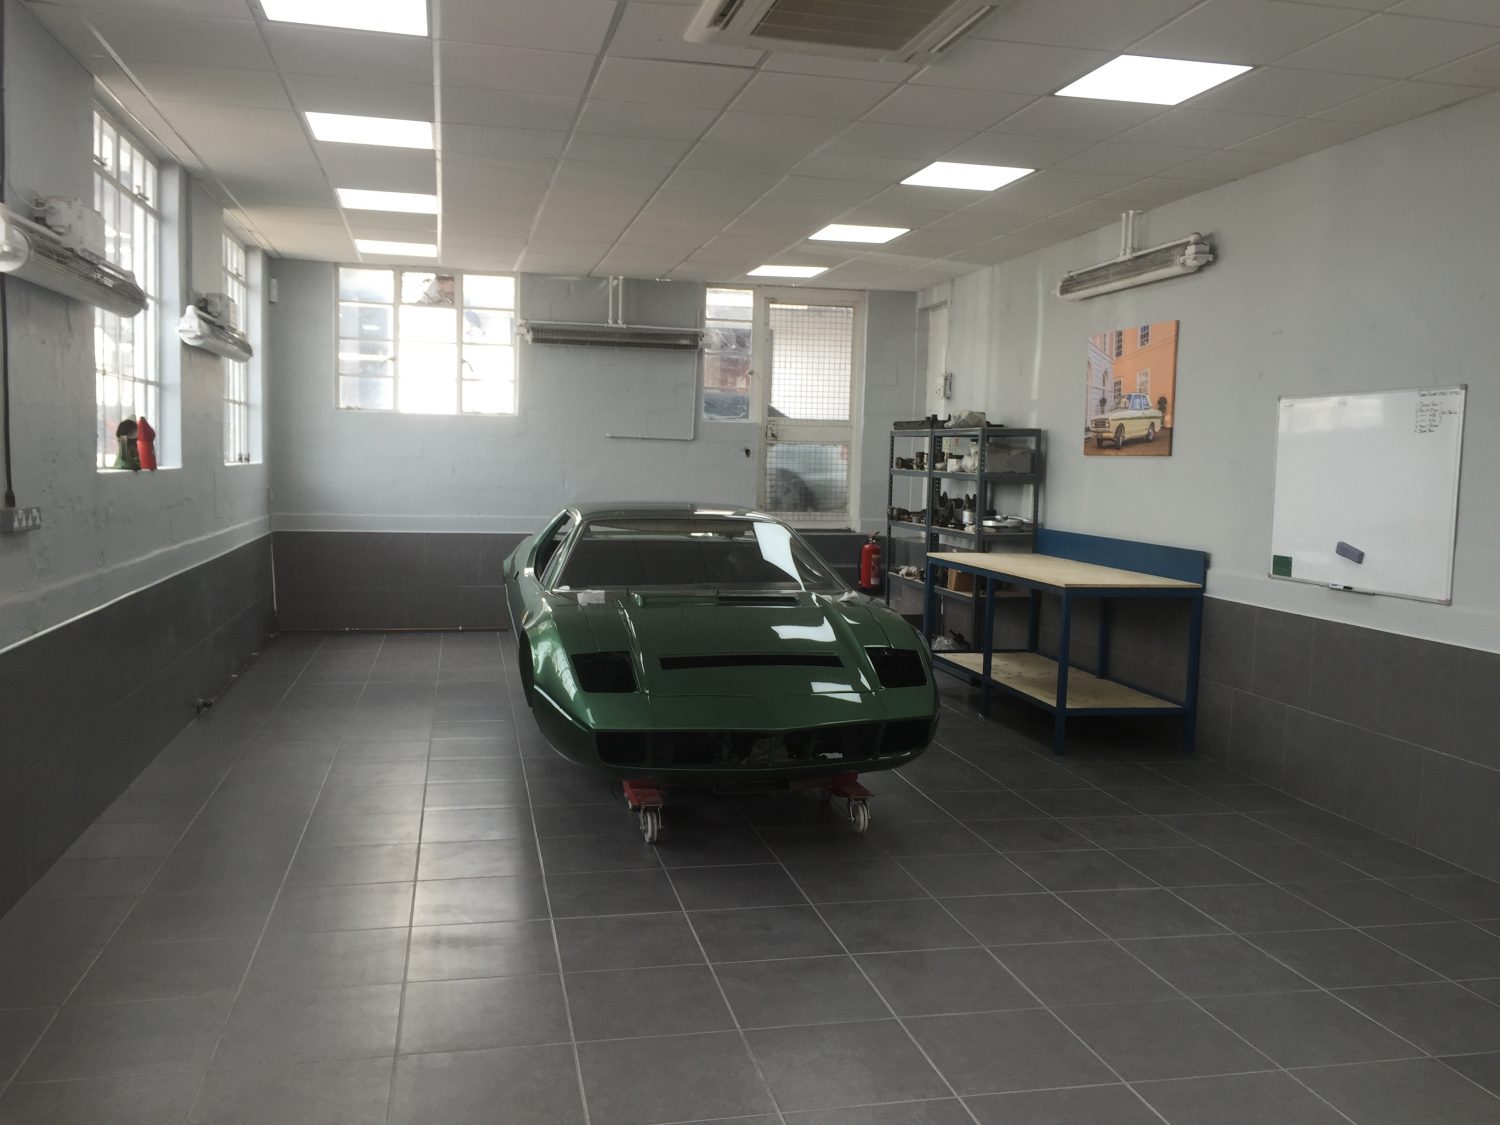 Maserati Merak in the tiled assembly room